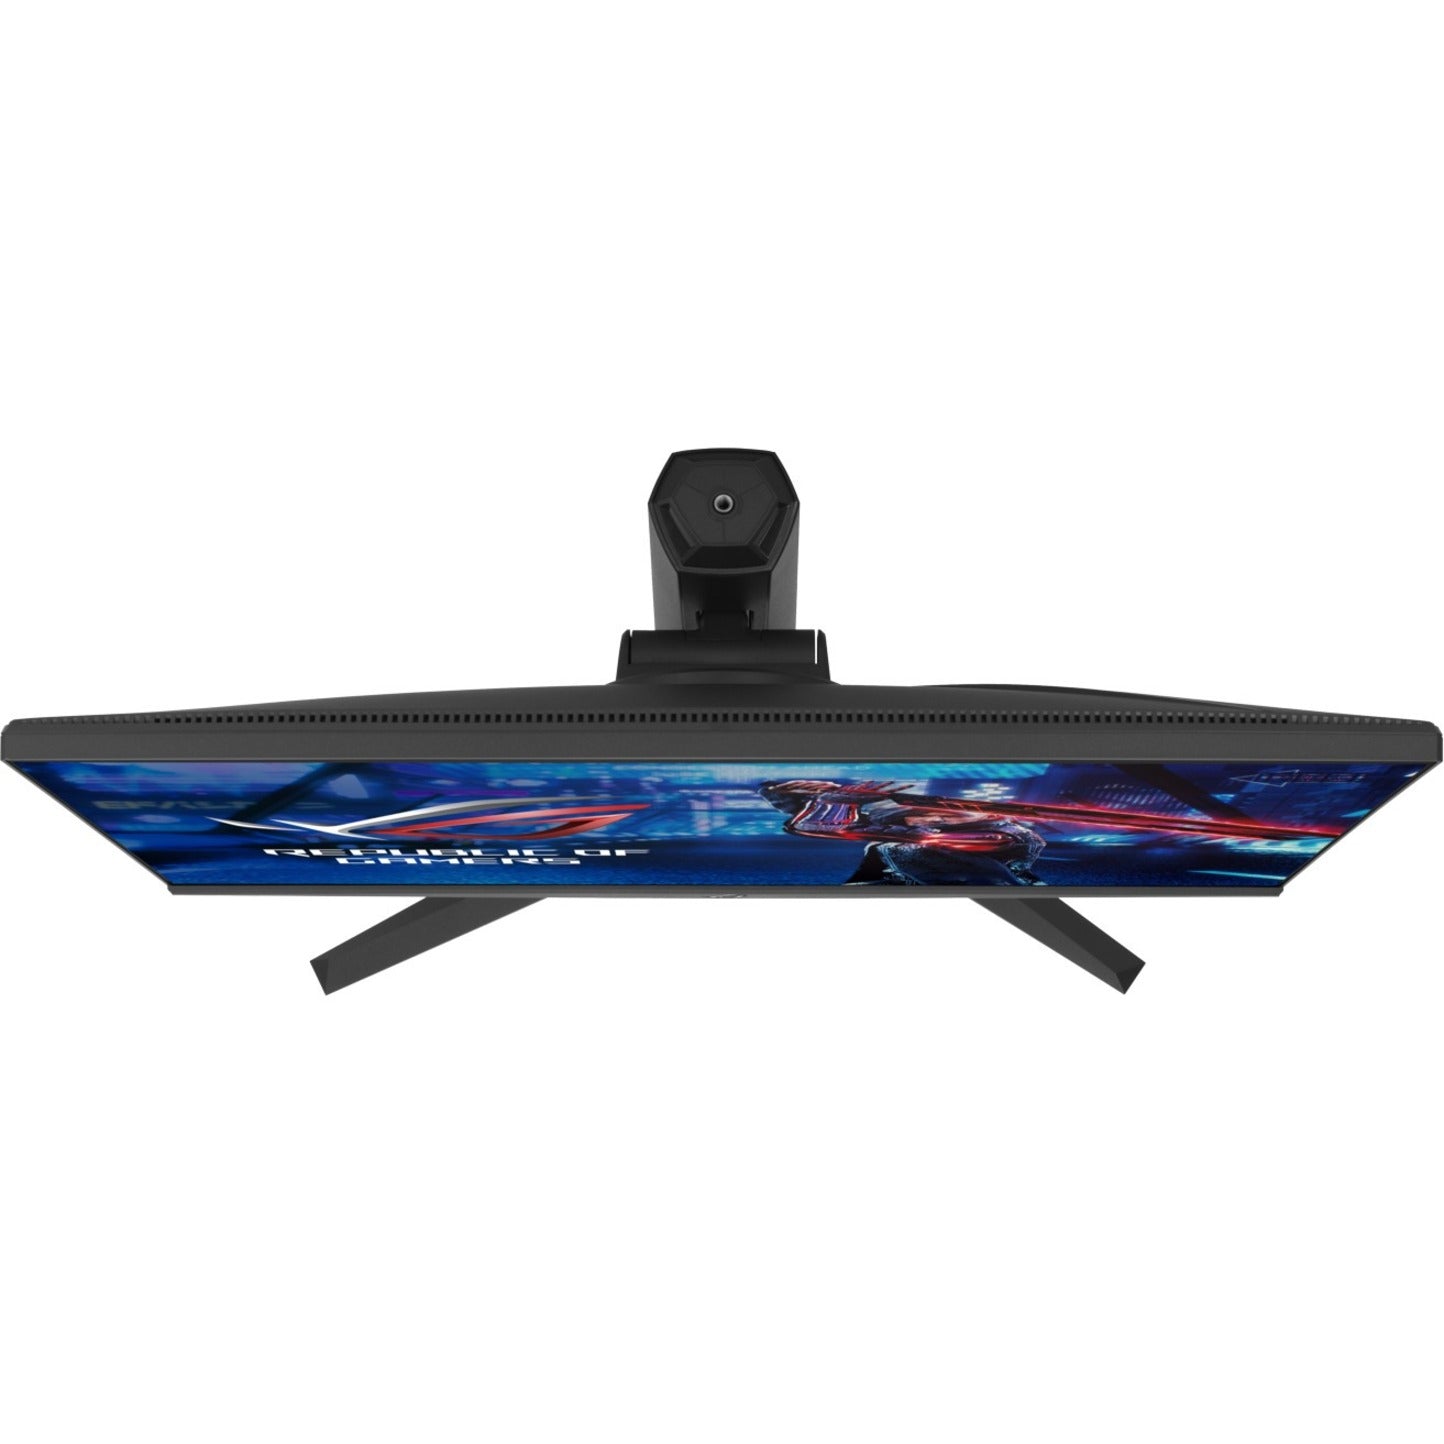 Asus ROG XG256Q Strix 24.5" Gaming LCD Monitor, Full HD, 180Hz Refresh Rate, FreeSync Premium Pro/G-sync Compatible